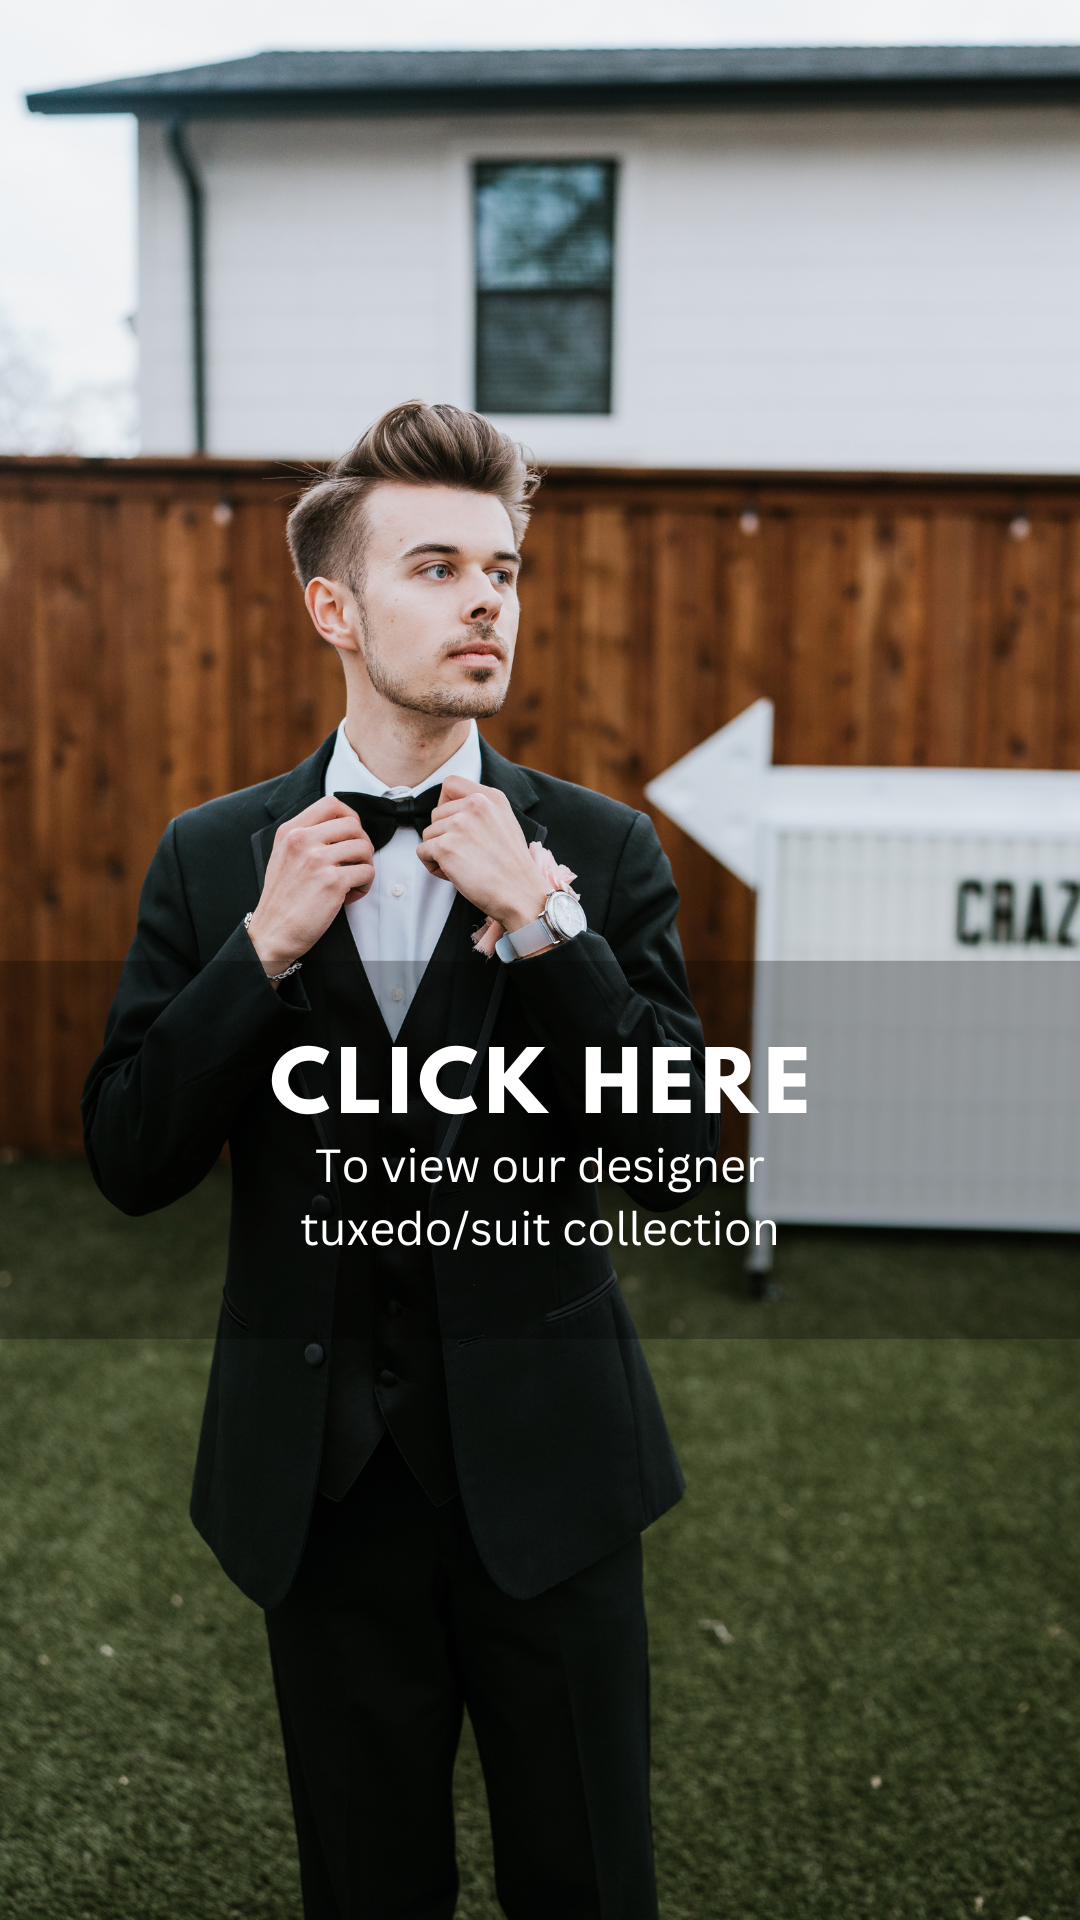 brides-and-beyond-tuxedos-button